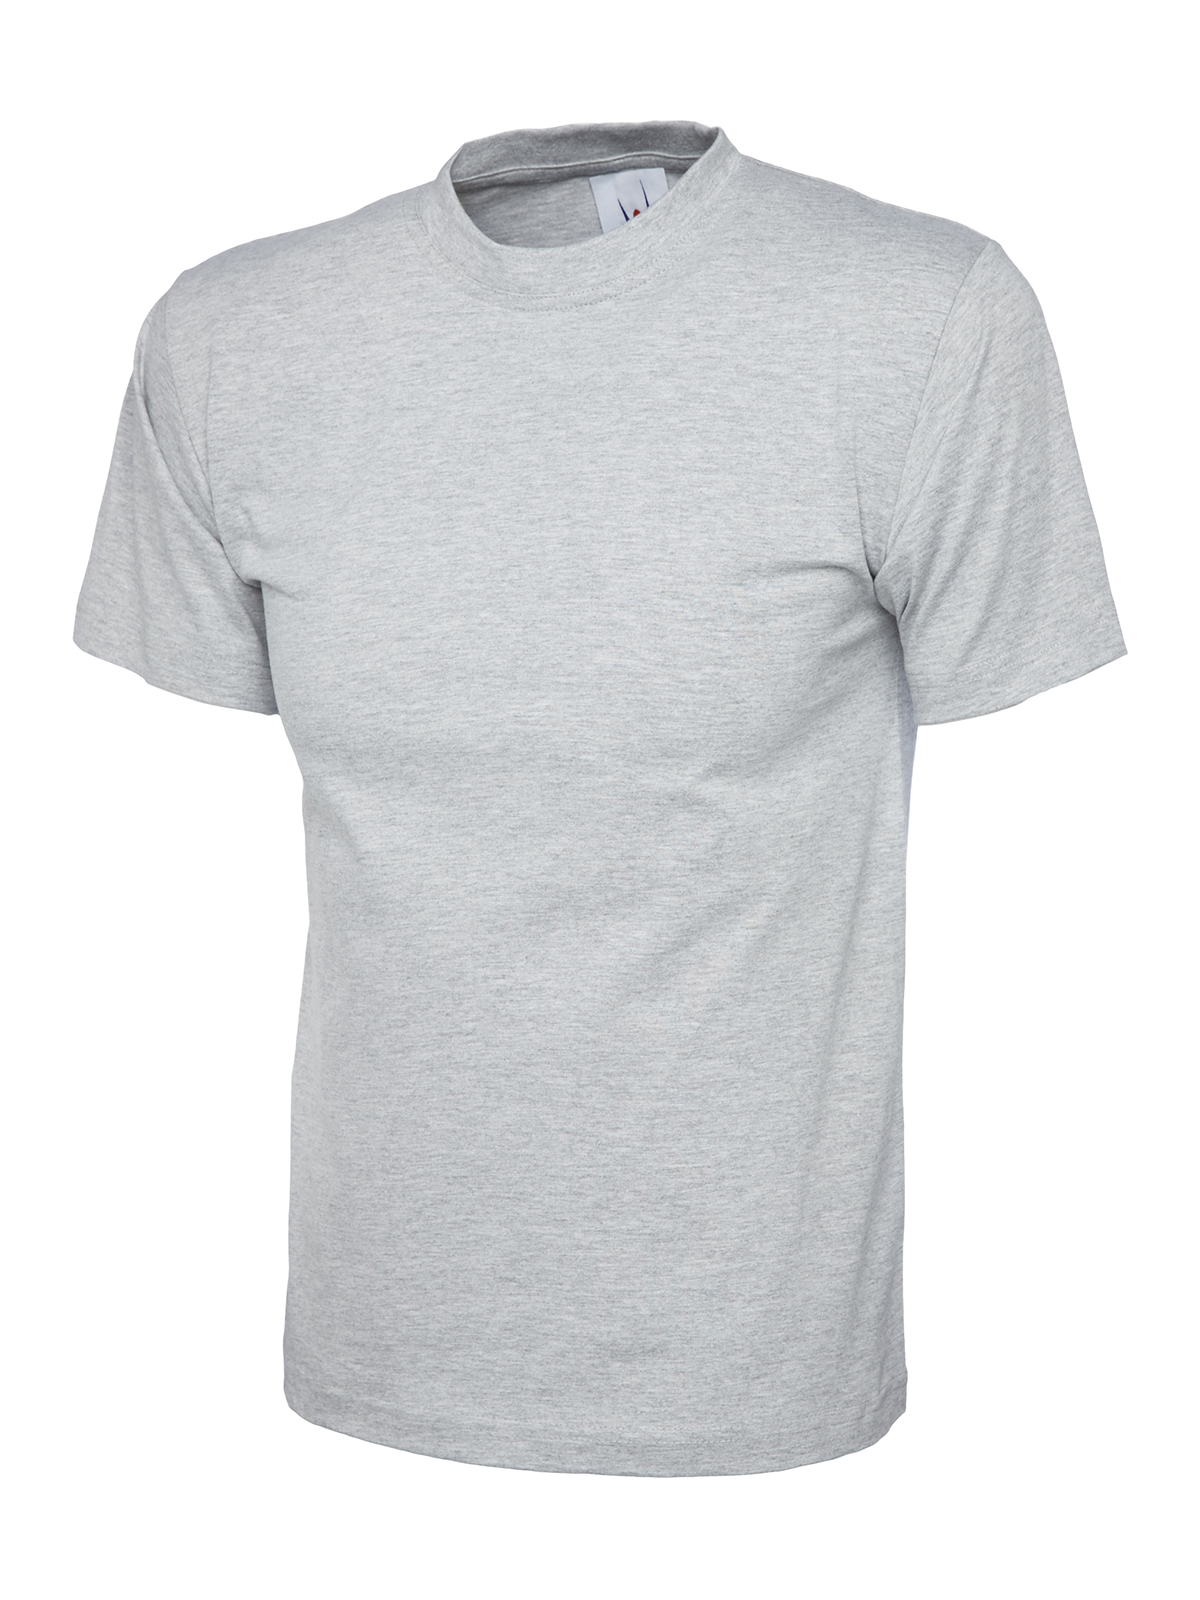 Uneek Herren T-Shirt Classic, Grau